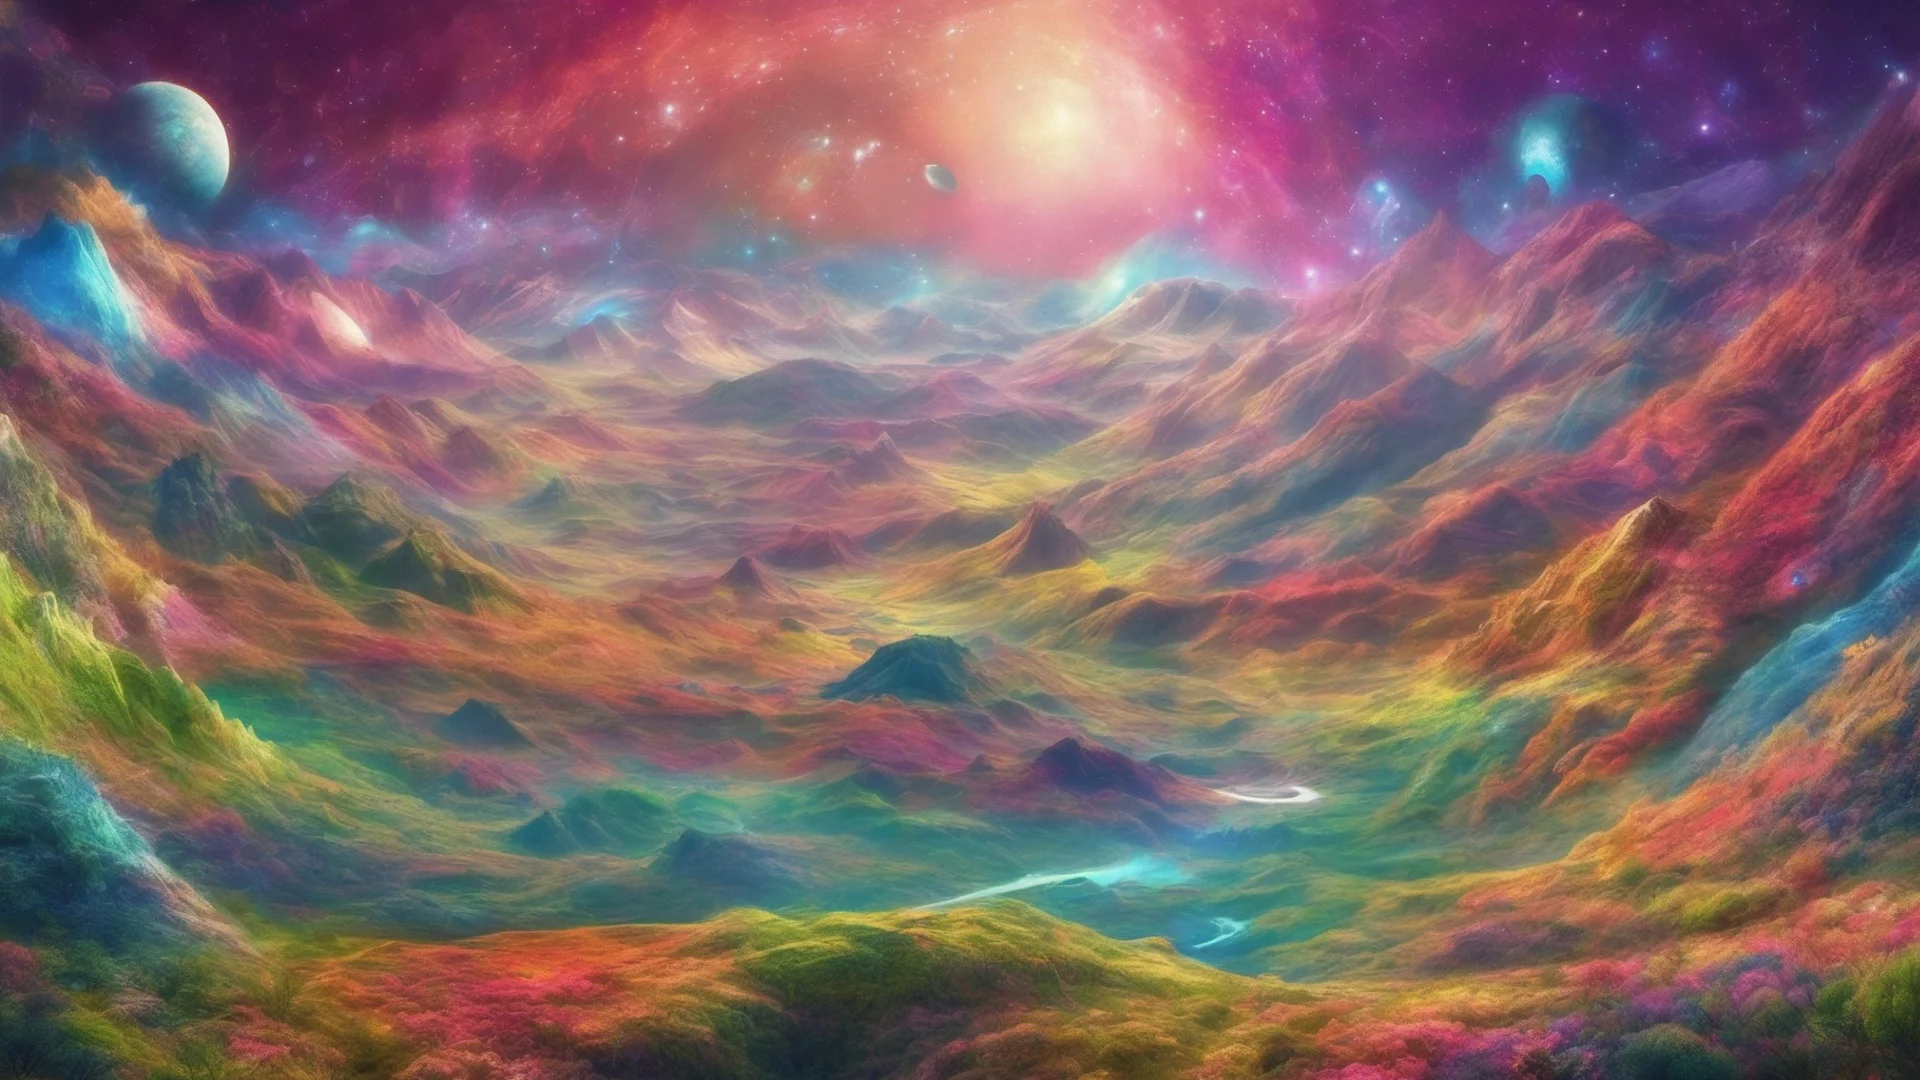 hills valleys colorful fantasy universes galaxy visible good looking trending fantastic 1 wide